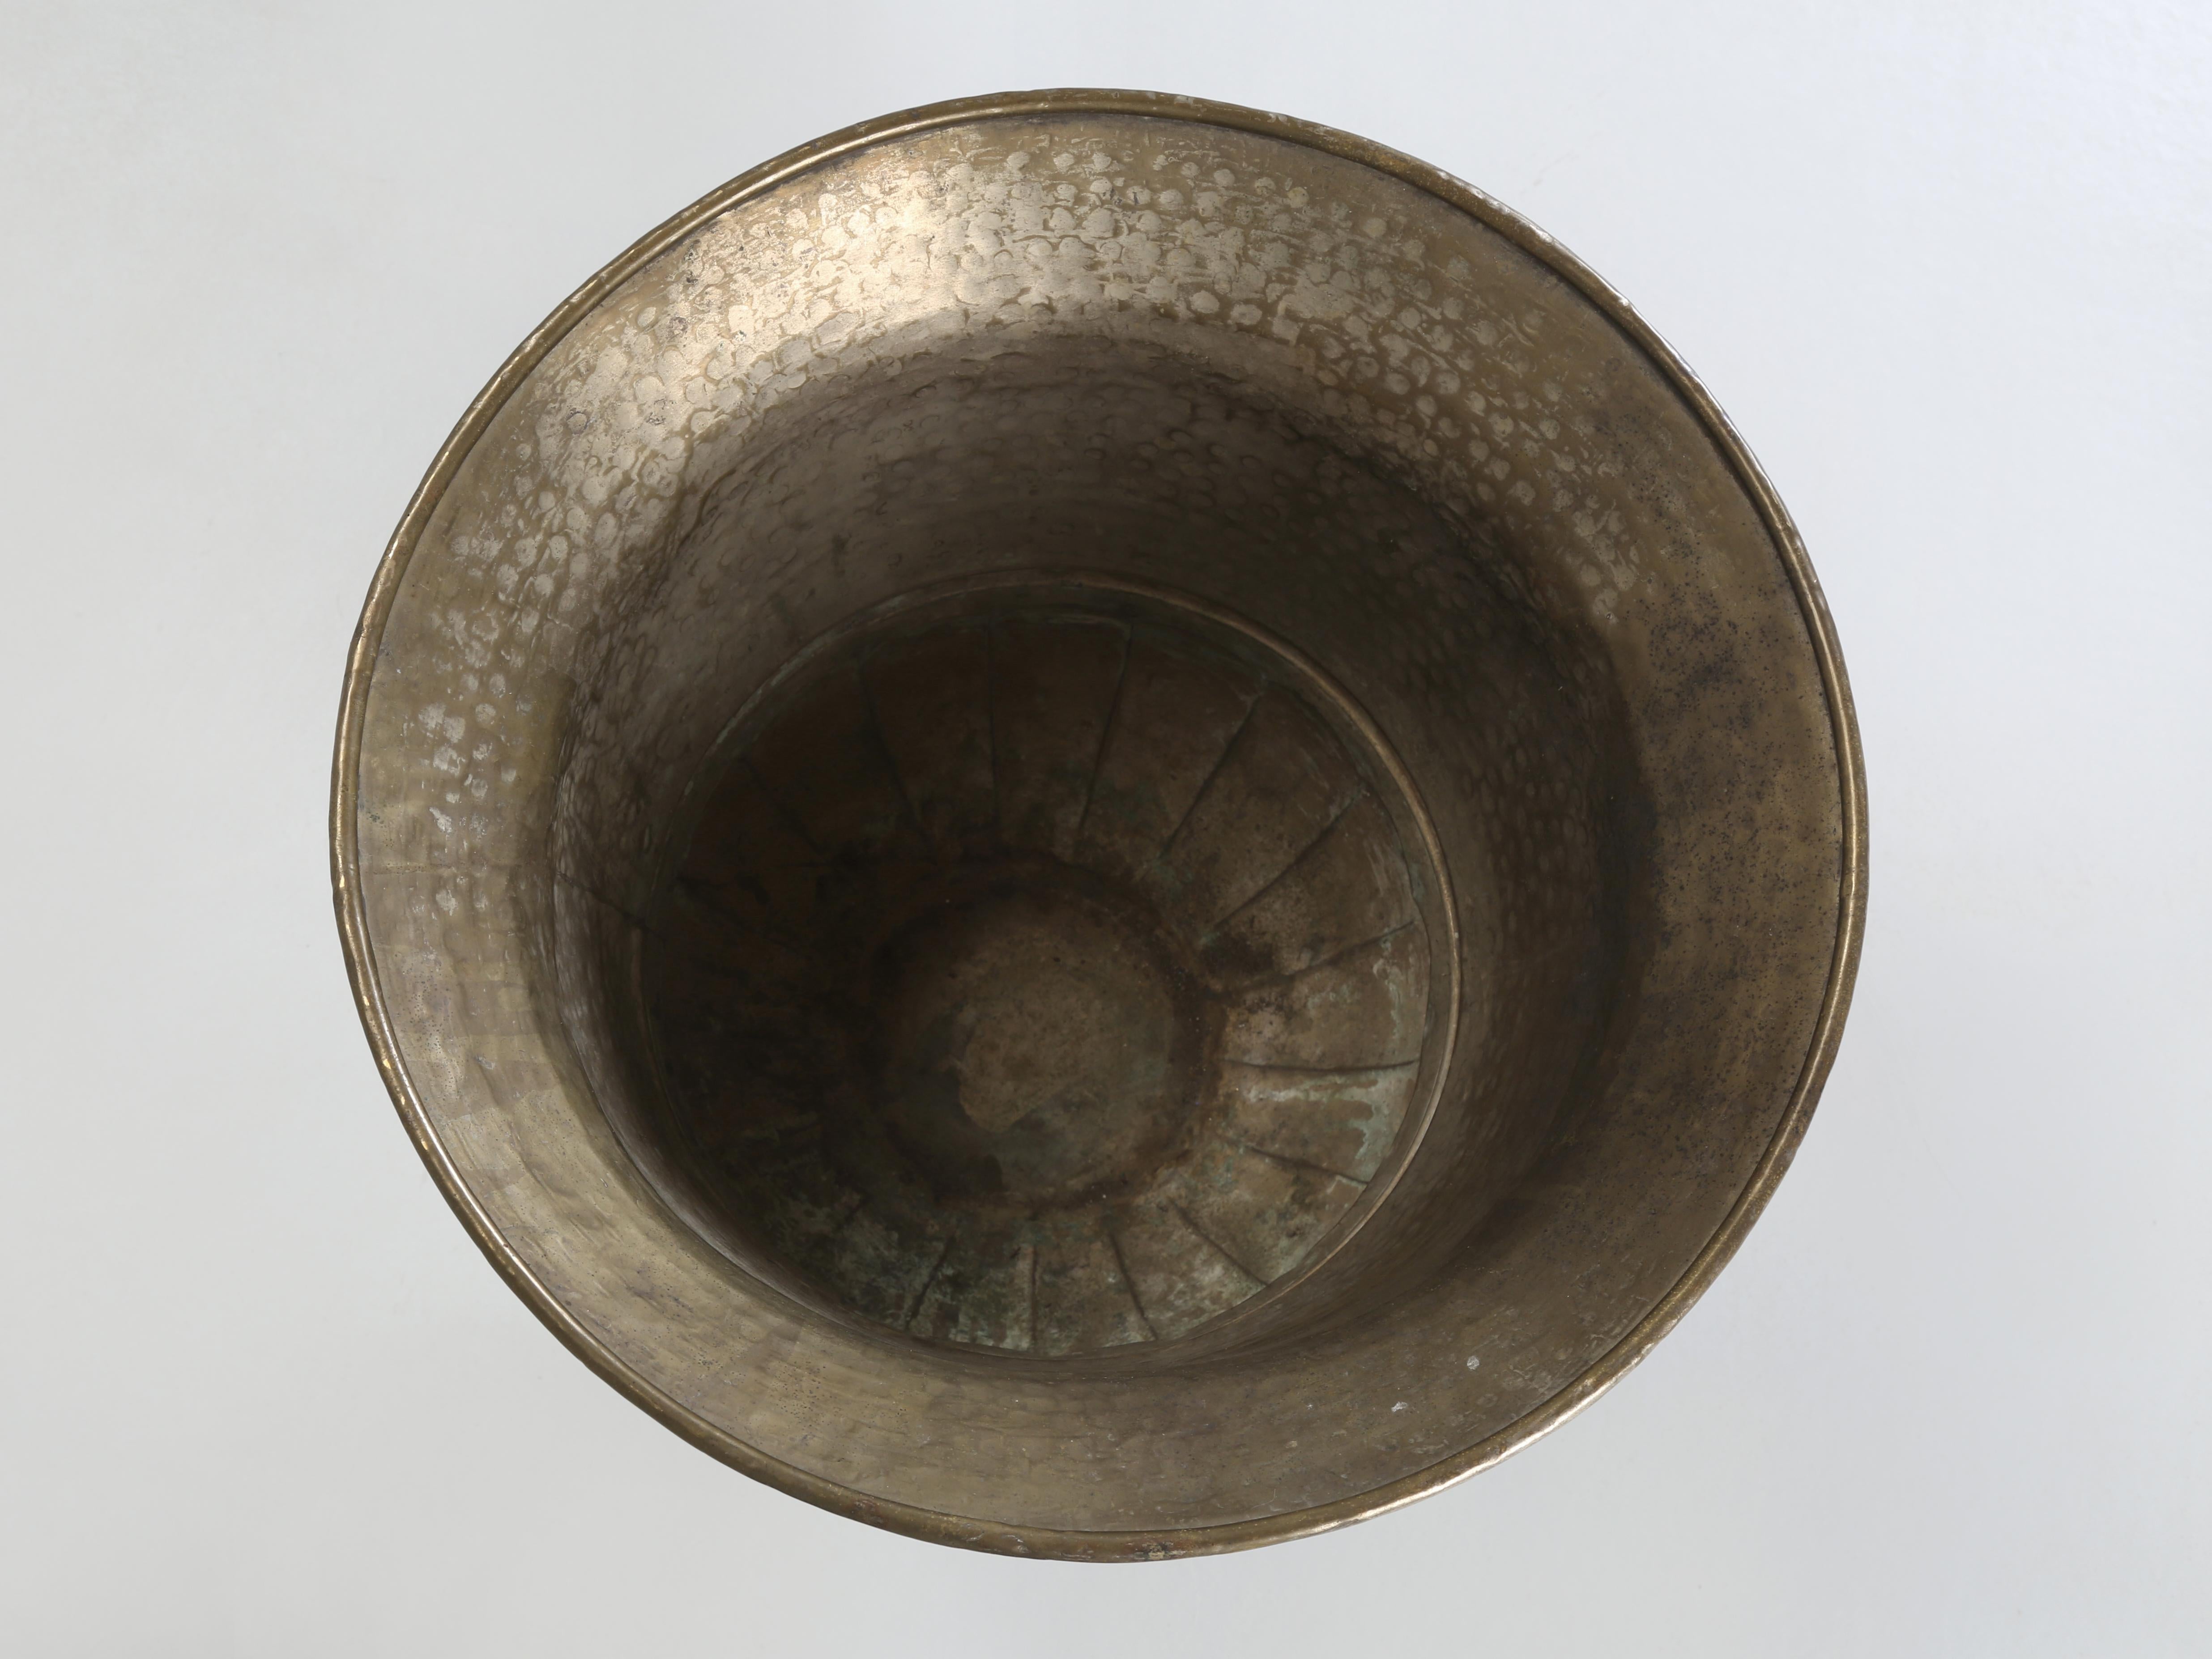 Huge Solid Brass Vase or Brass Urn Hand-Hammered Finish with Cast Brass Base  6